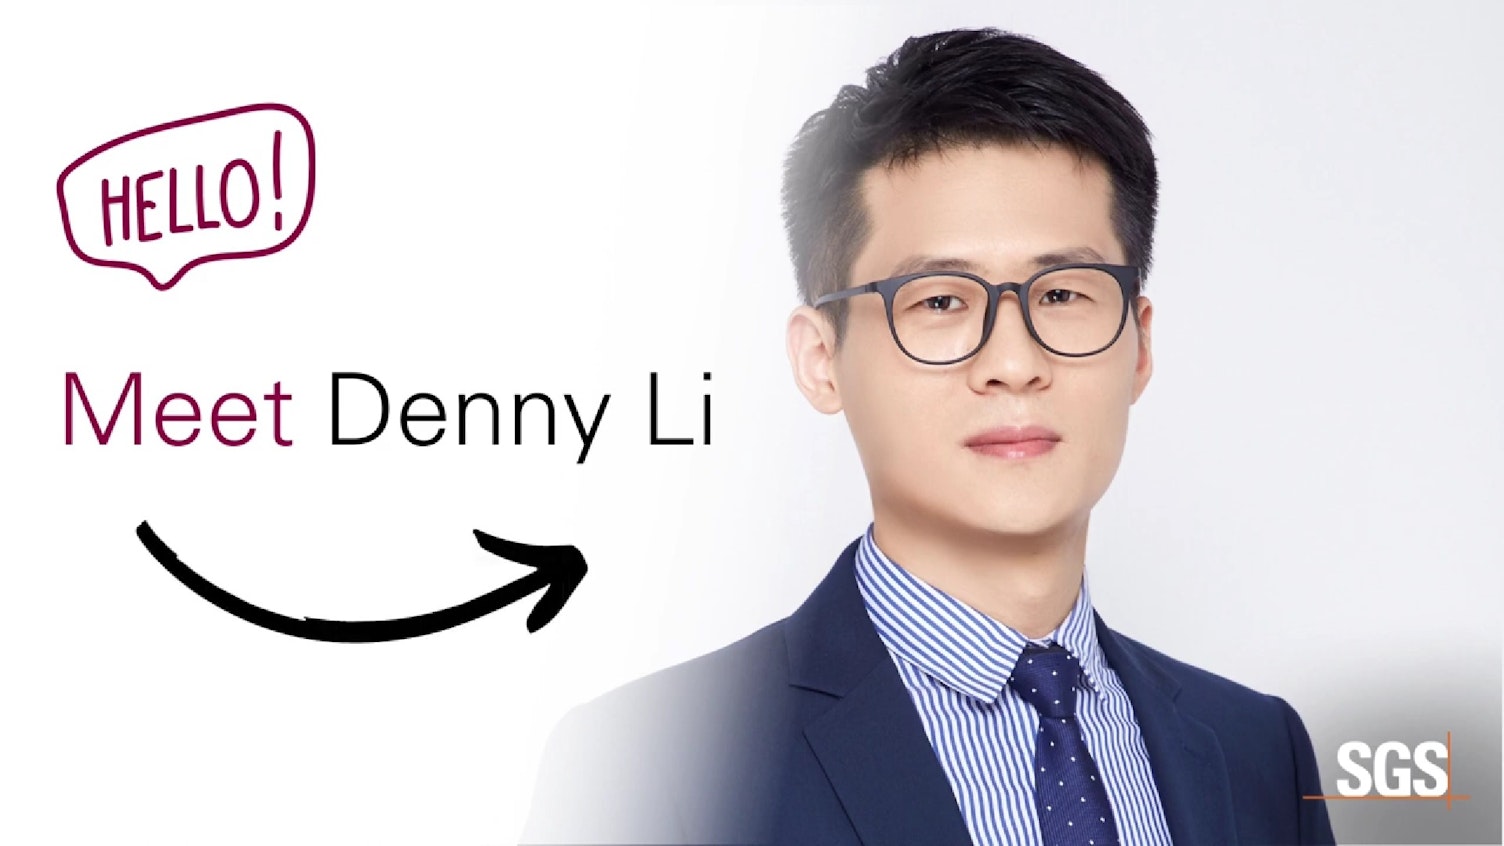 Meet our Cosmetics and Hygiene Expert Denny Li